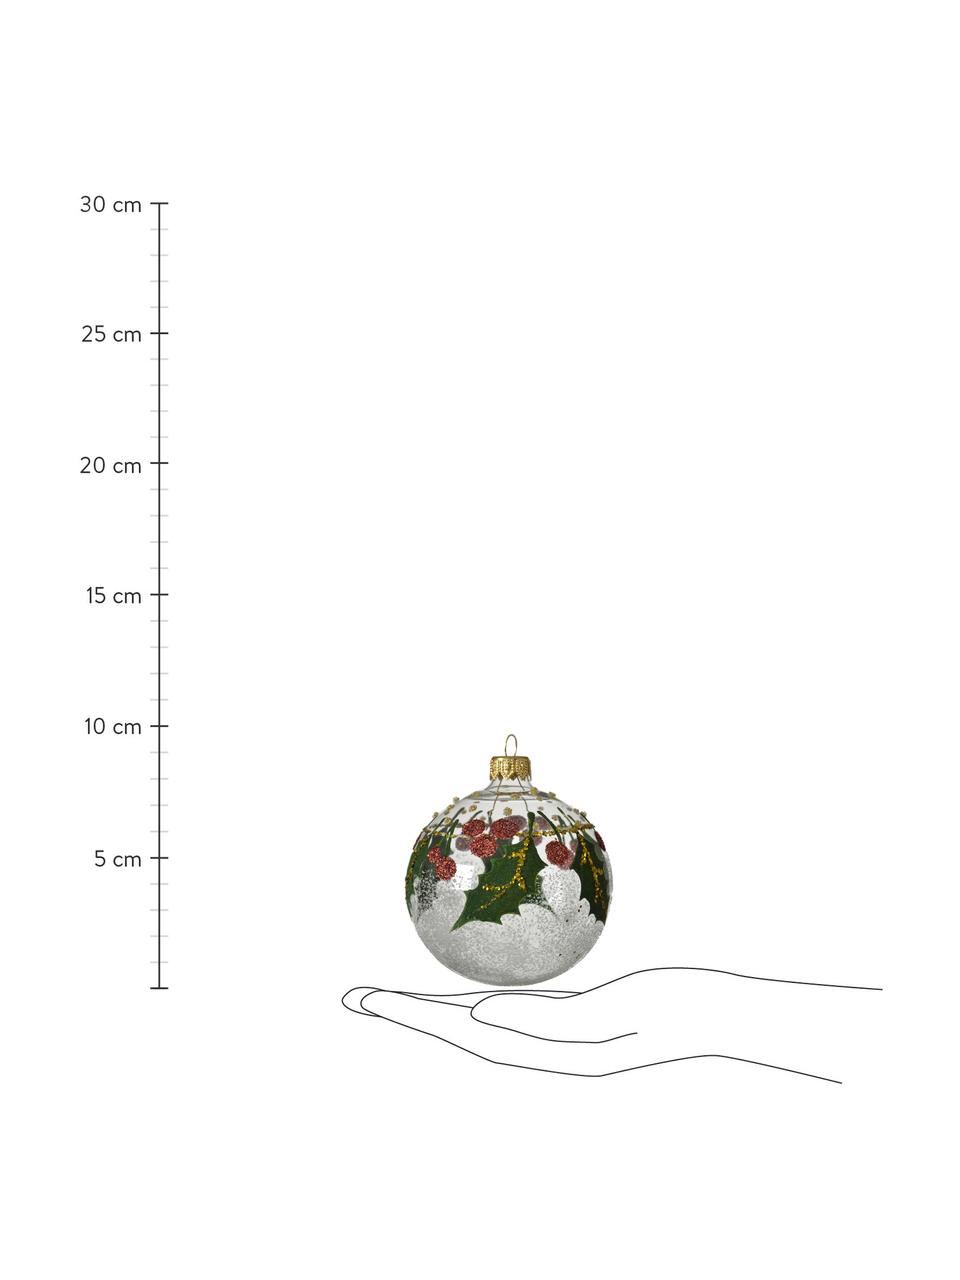 Kerstballen Misto, 2 stuks, Transparant, donkergroen, rood, Ø 8 cm